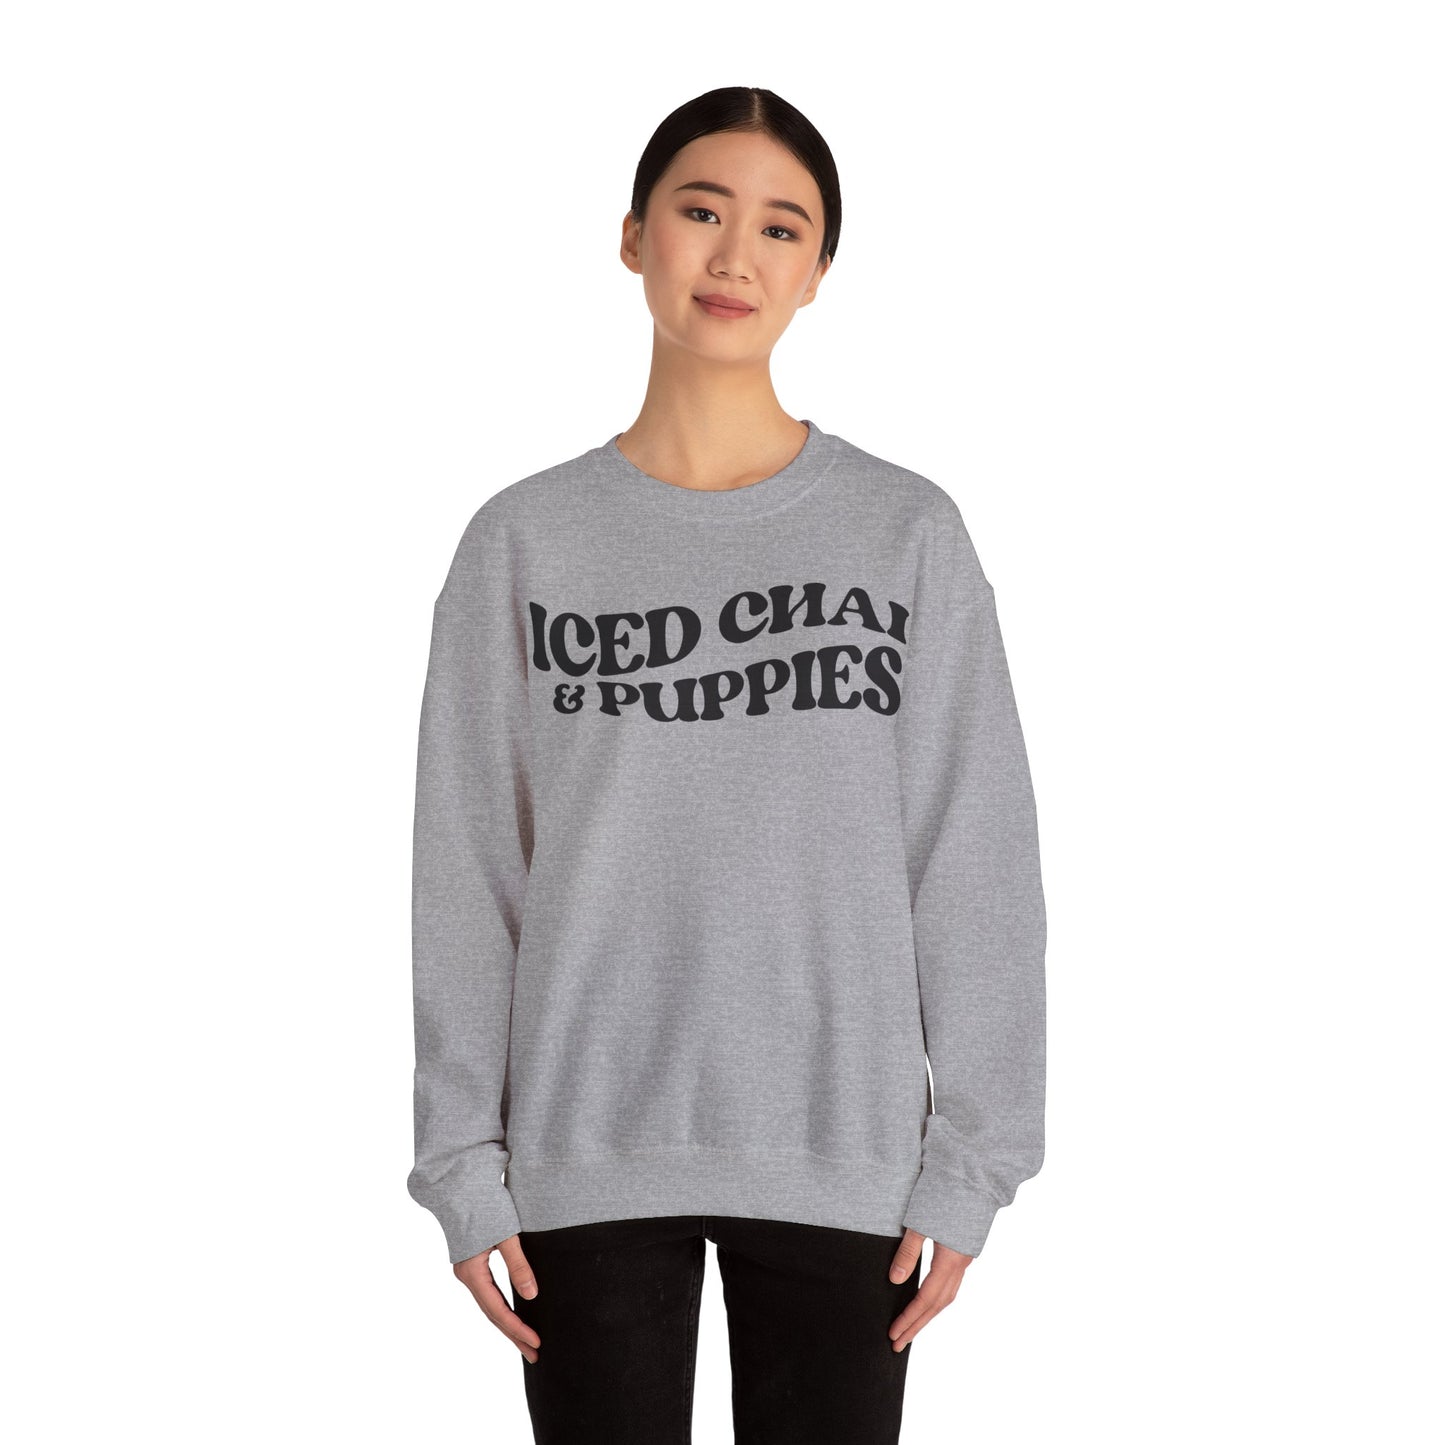 Iced Chai and Puppies Crewneck Sweatshirt